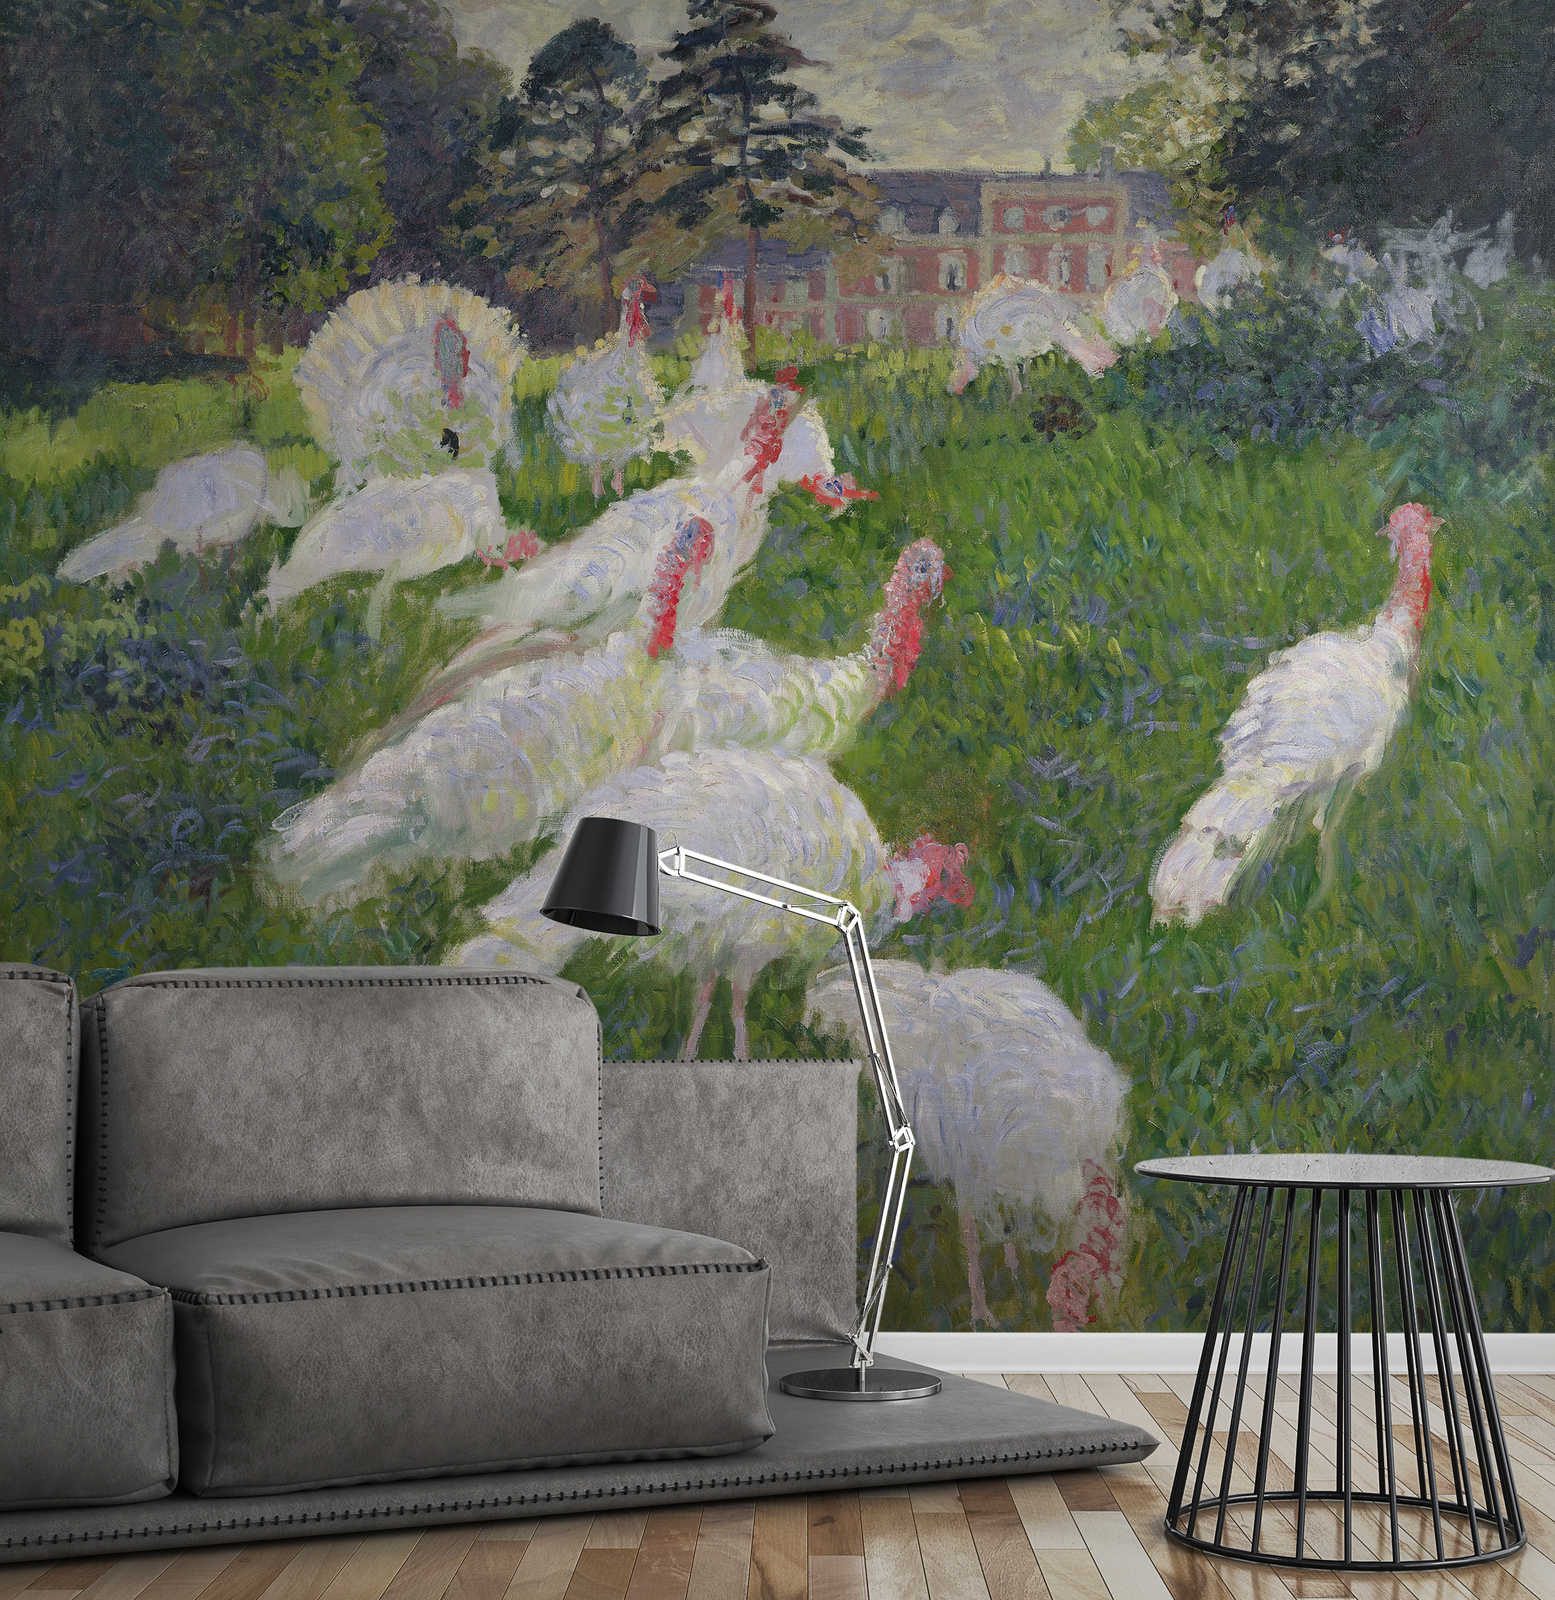             Photo wallpaper "Turkeys in Rottembourg Castle" by Claude Monet
        